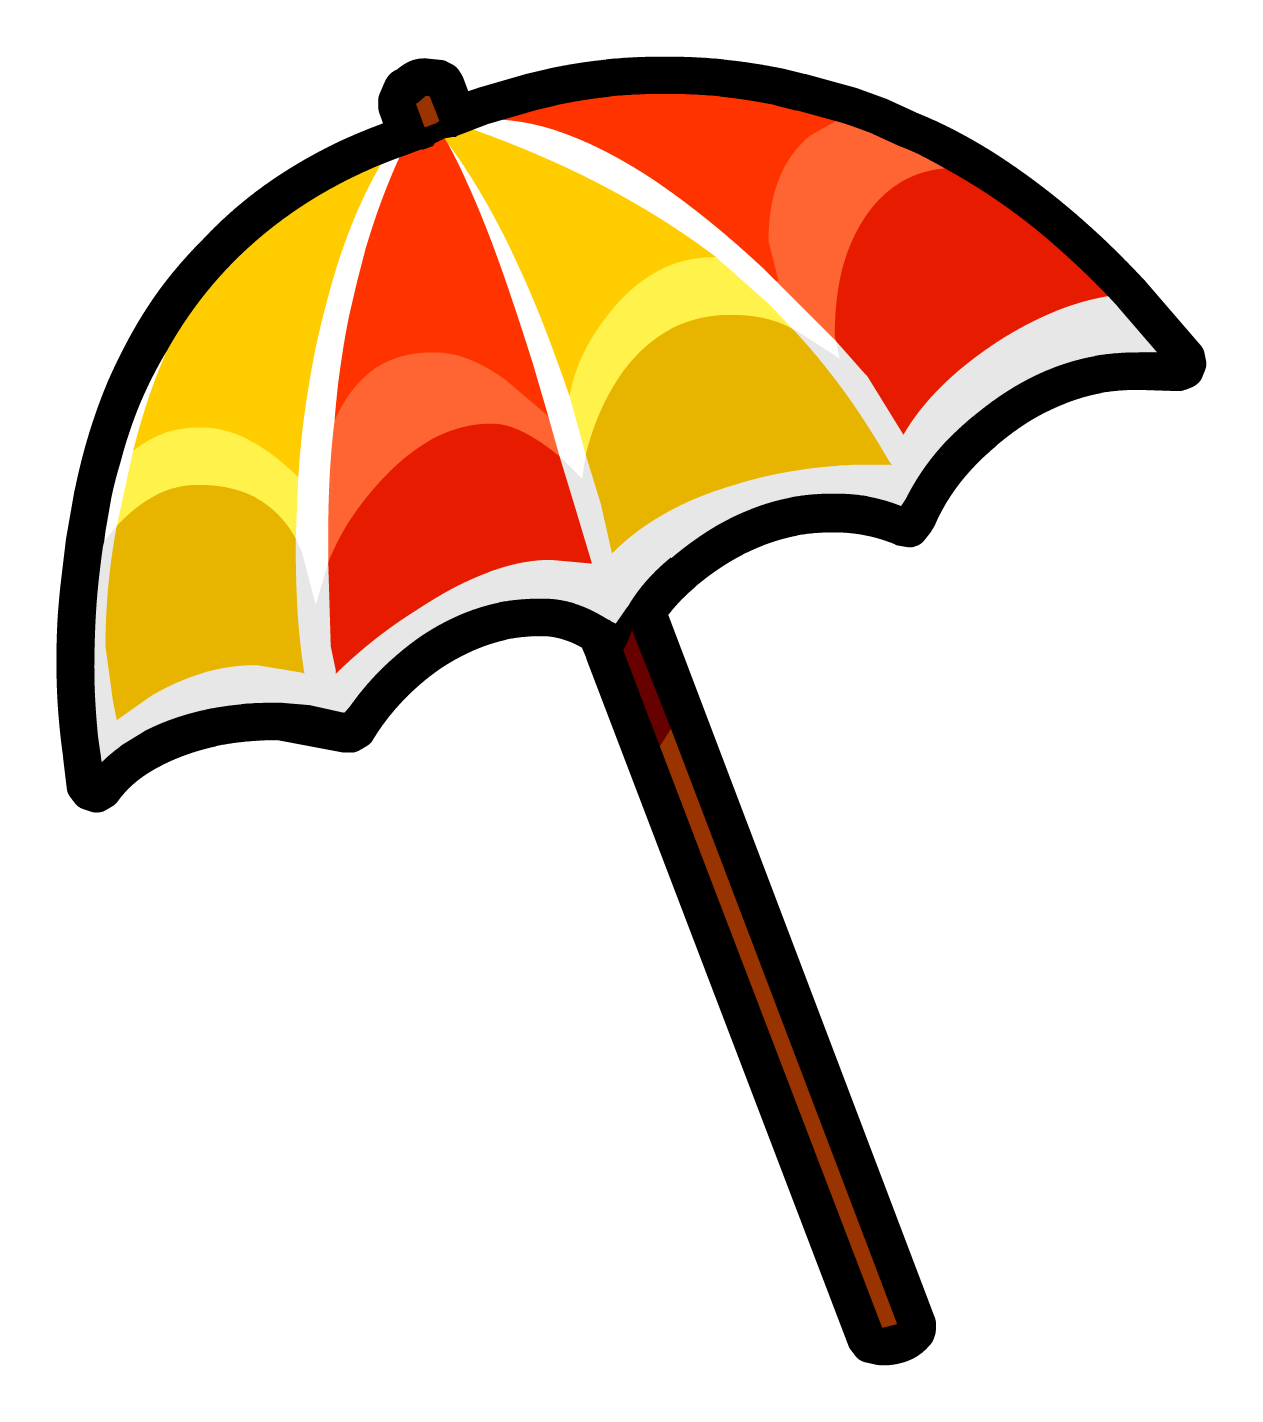 Beach Umbrella Pin - Club Penguin Wiki - The free, editable 